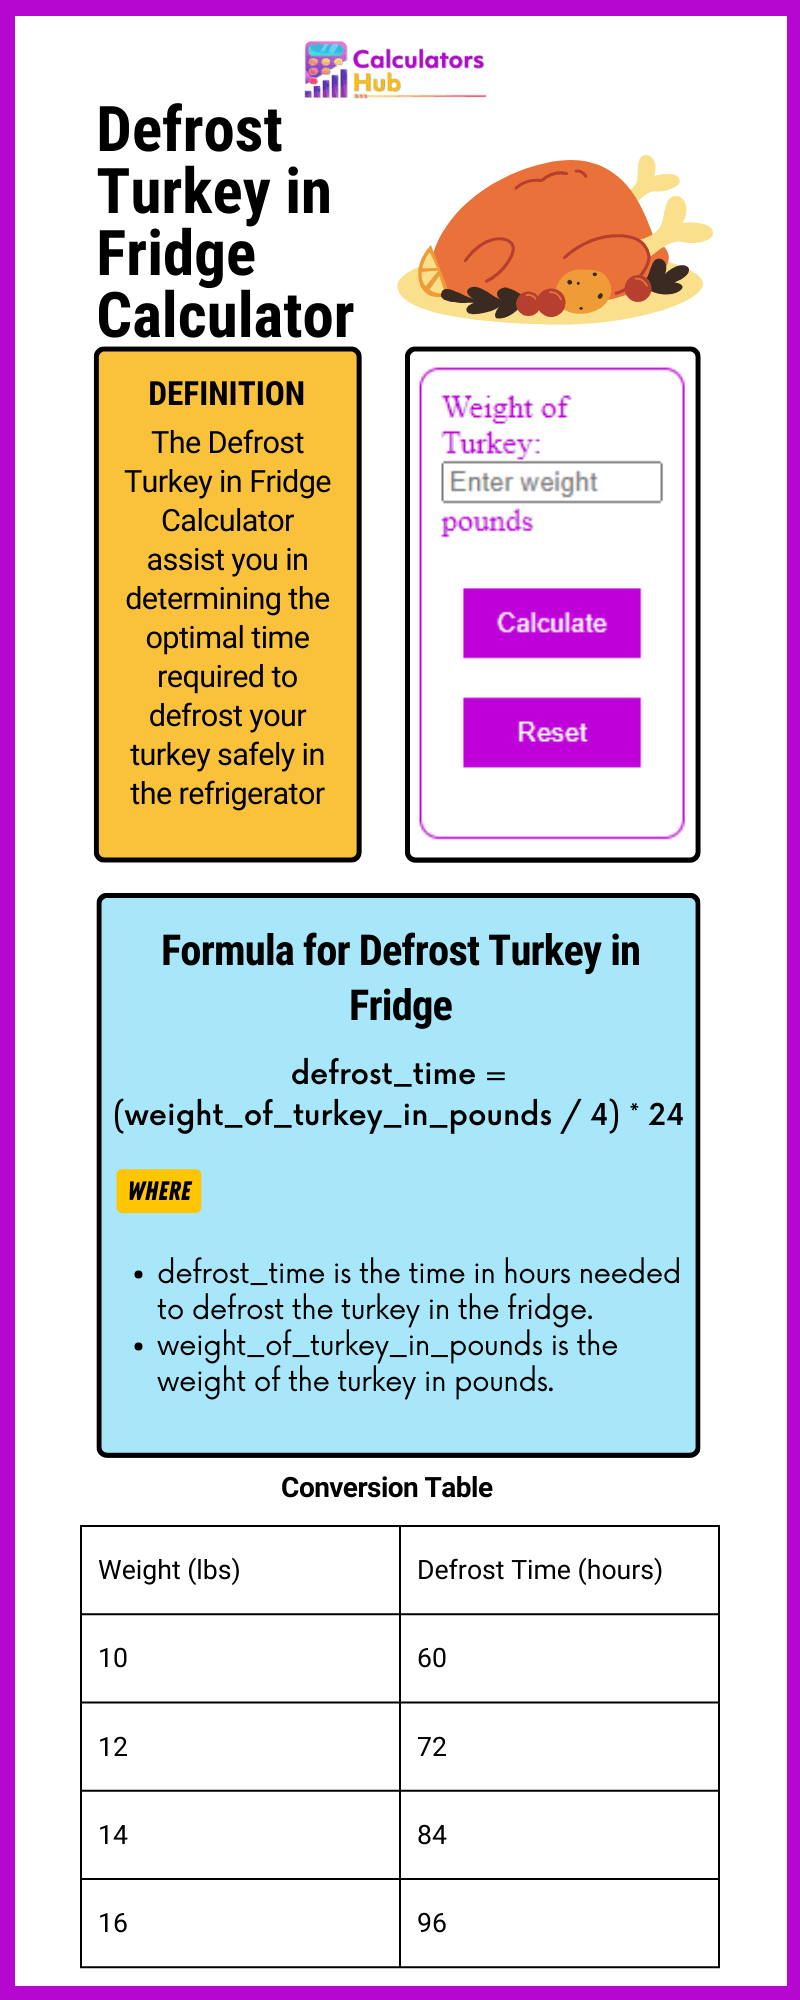 Defrost Turkey in Fridge Calculator